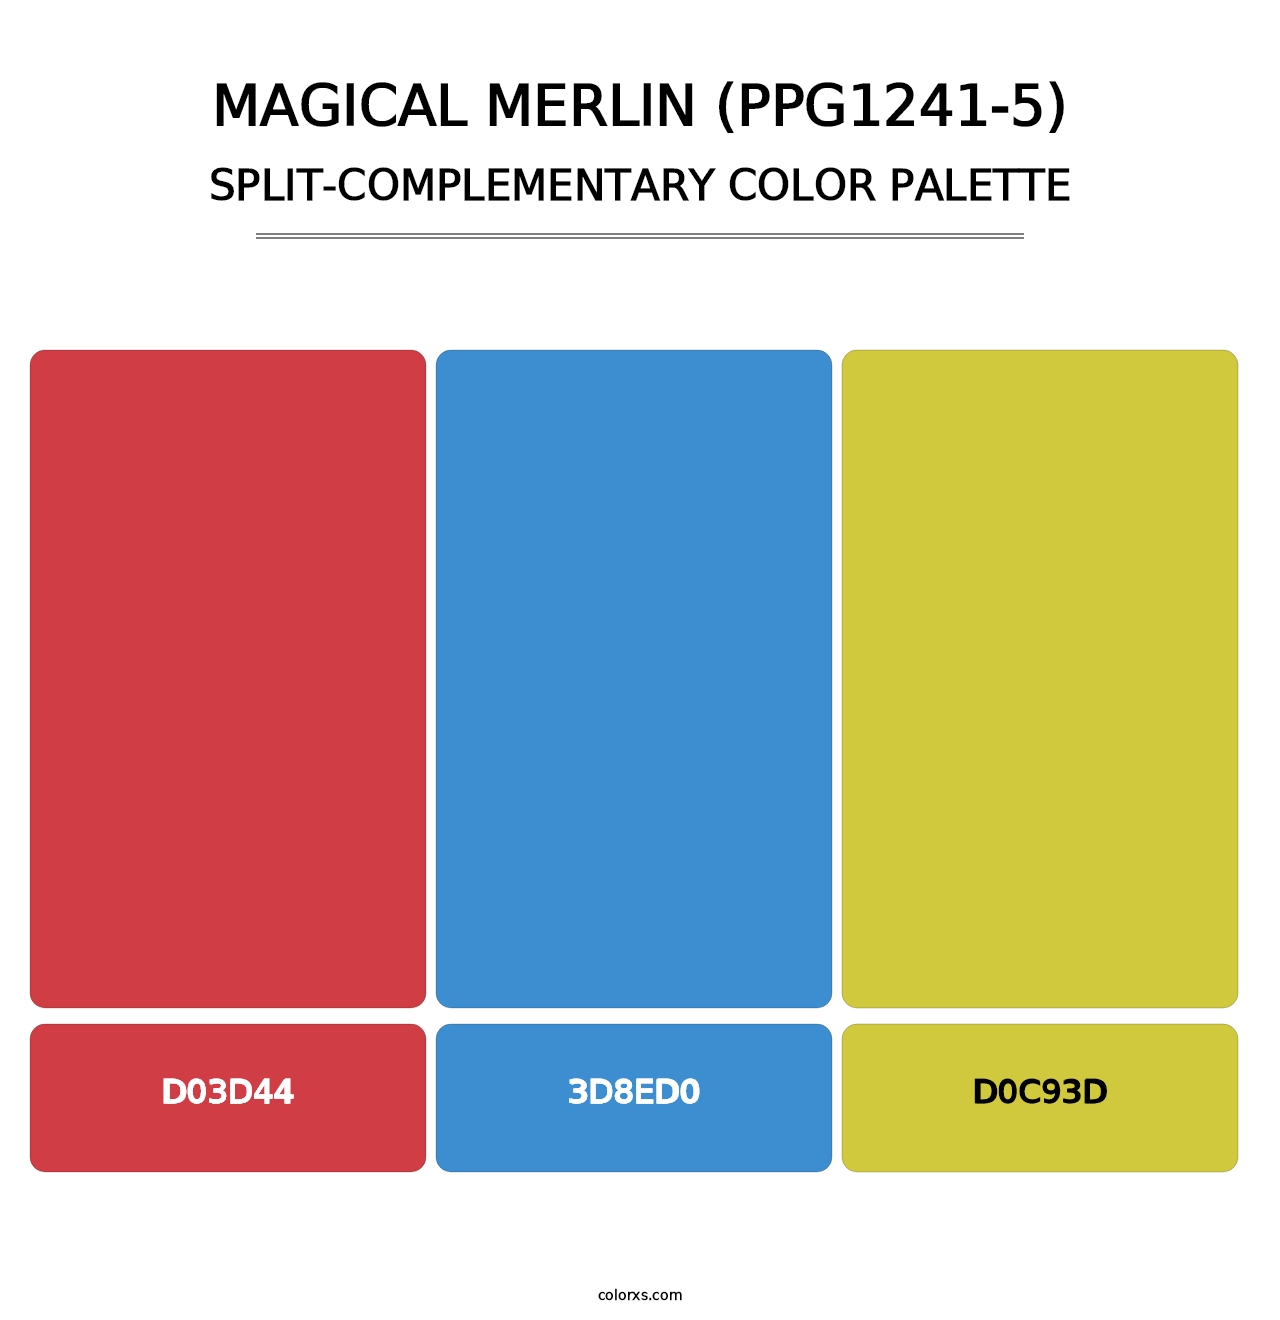 Magical Merlin (PPG1241-5) - Split-Complementary Color Palette